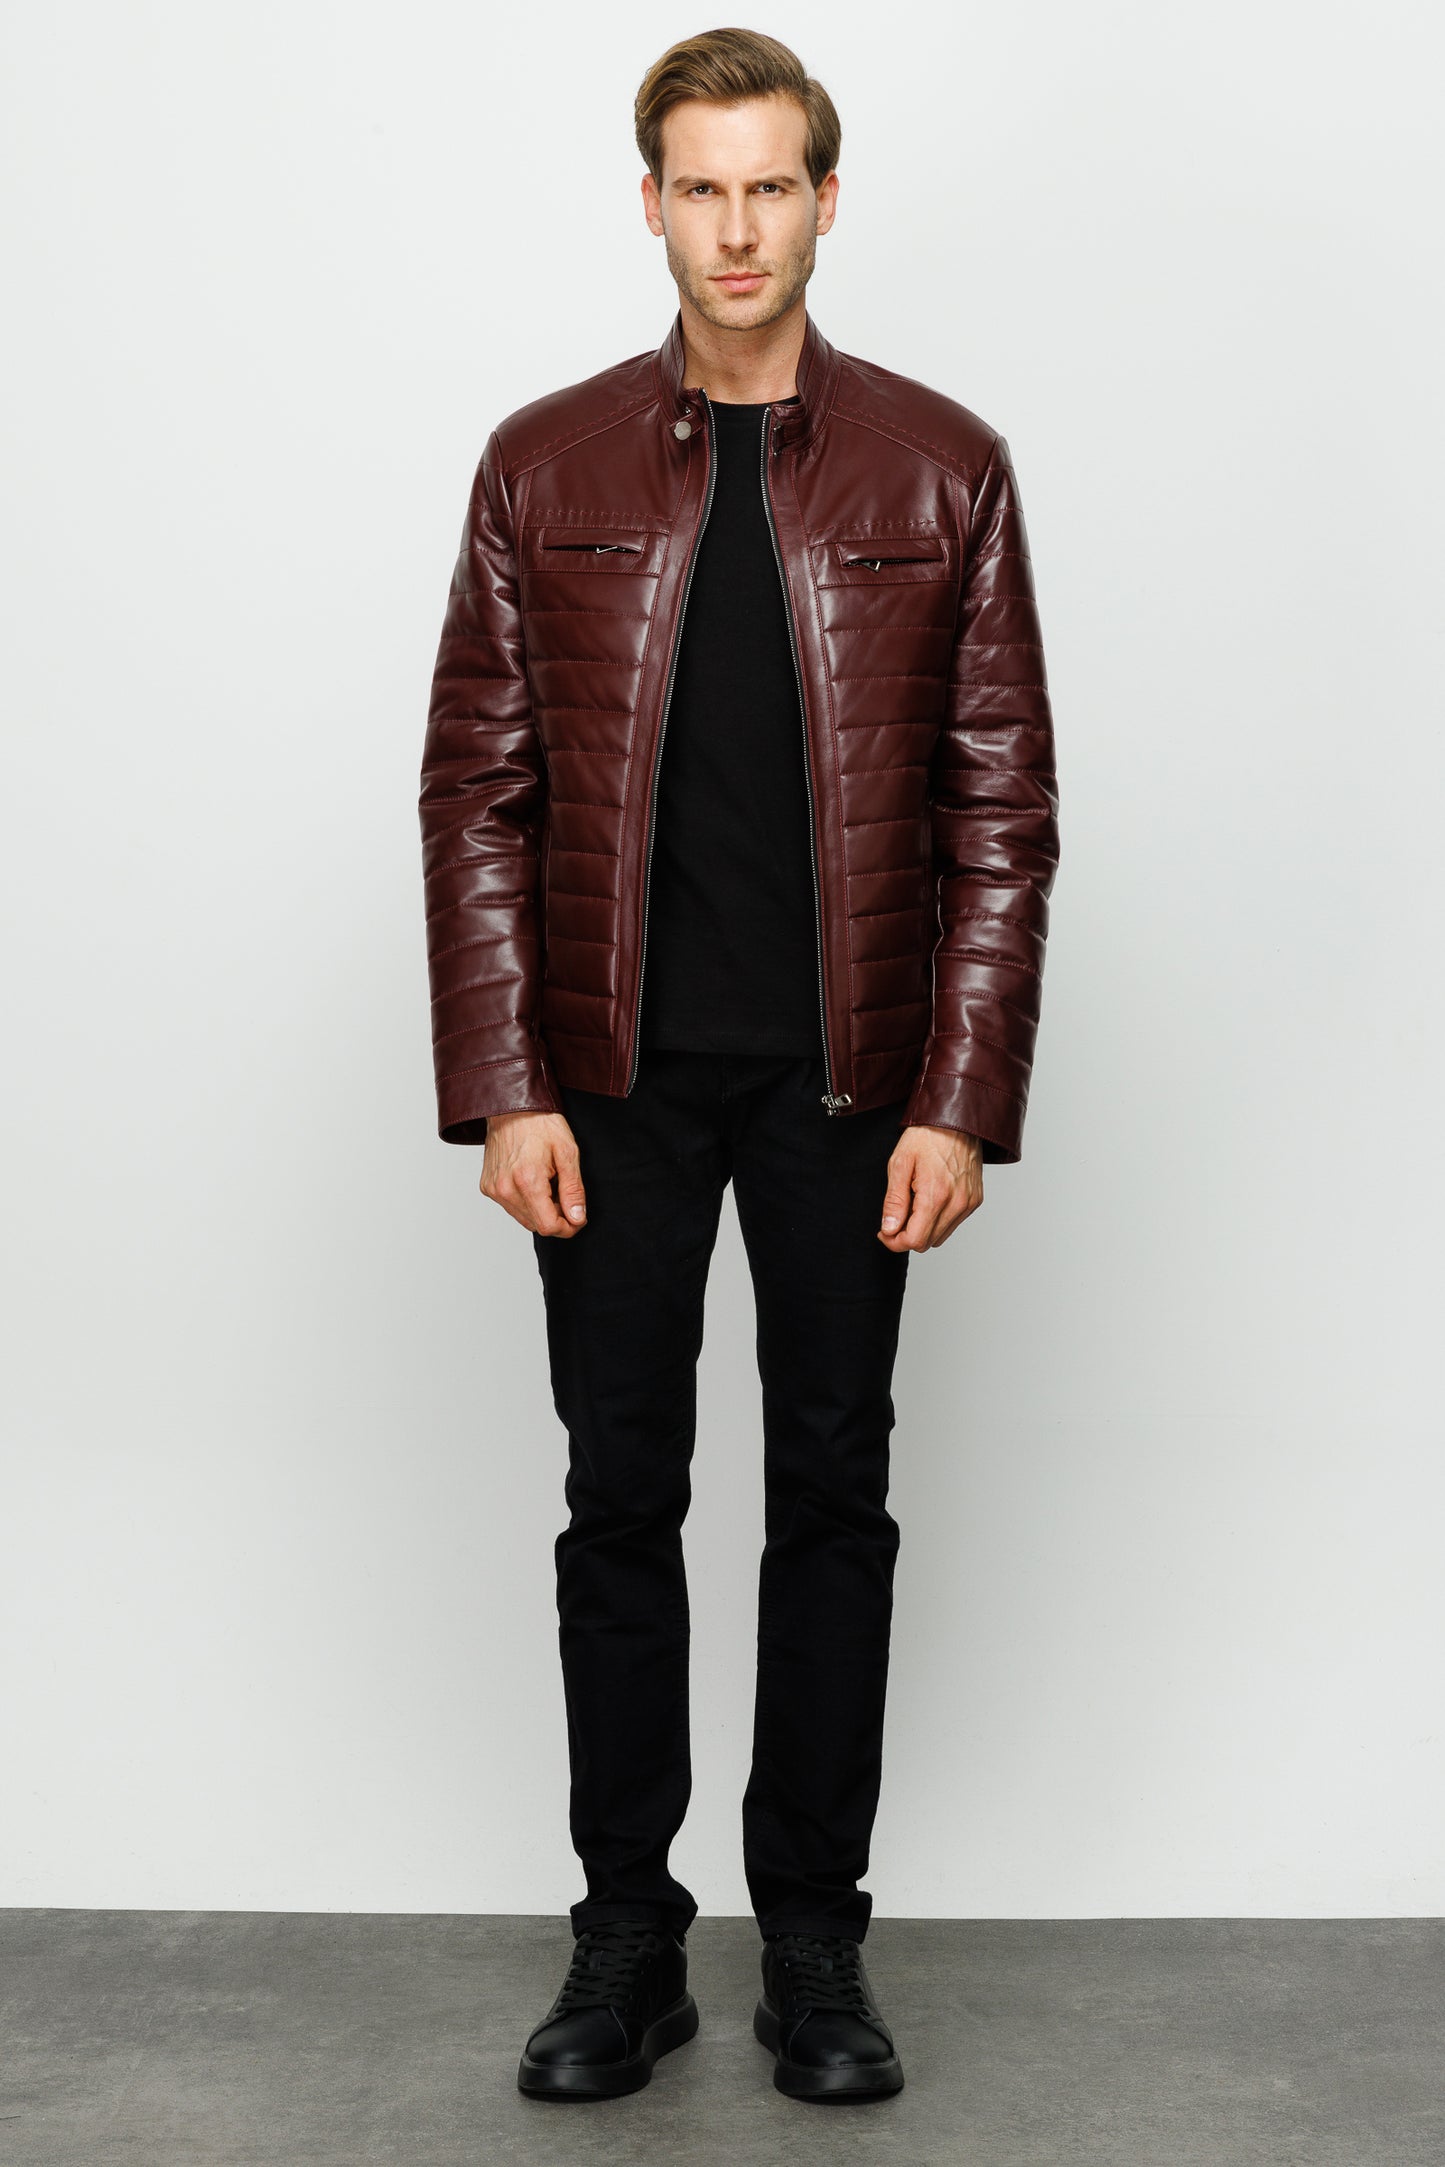 The Wilkerson Burgundy Leather Men Jacket